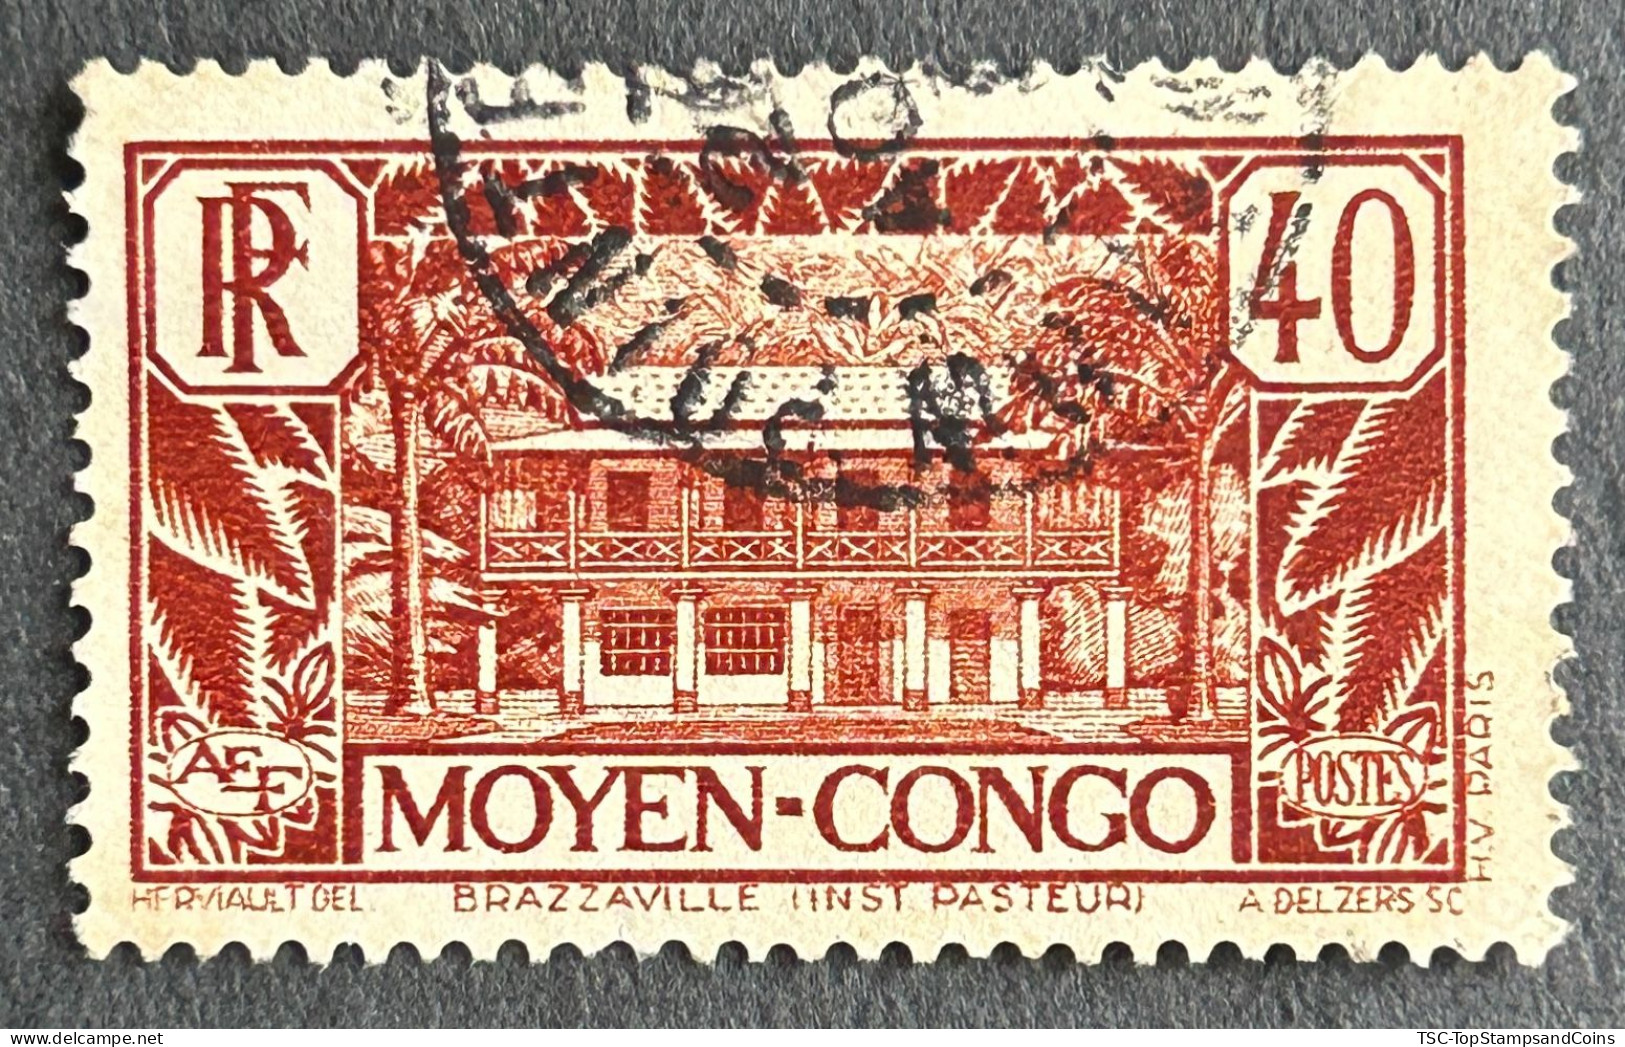 FRCG122U - Brazzaville - Pasteur Institute - 40 C Used Stamp - Middle Congo - 1933 - Gebraucht